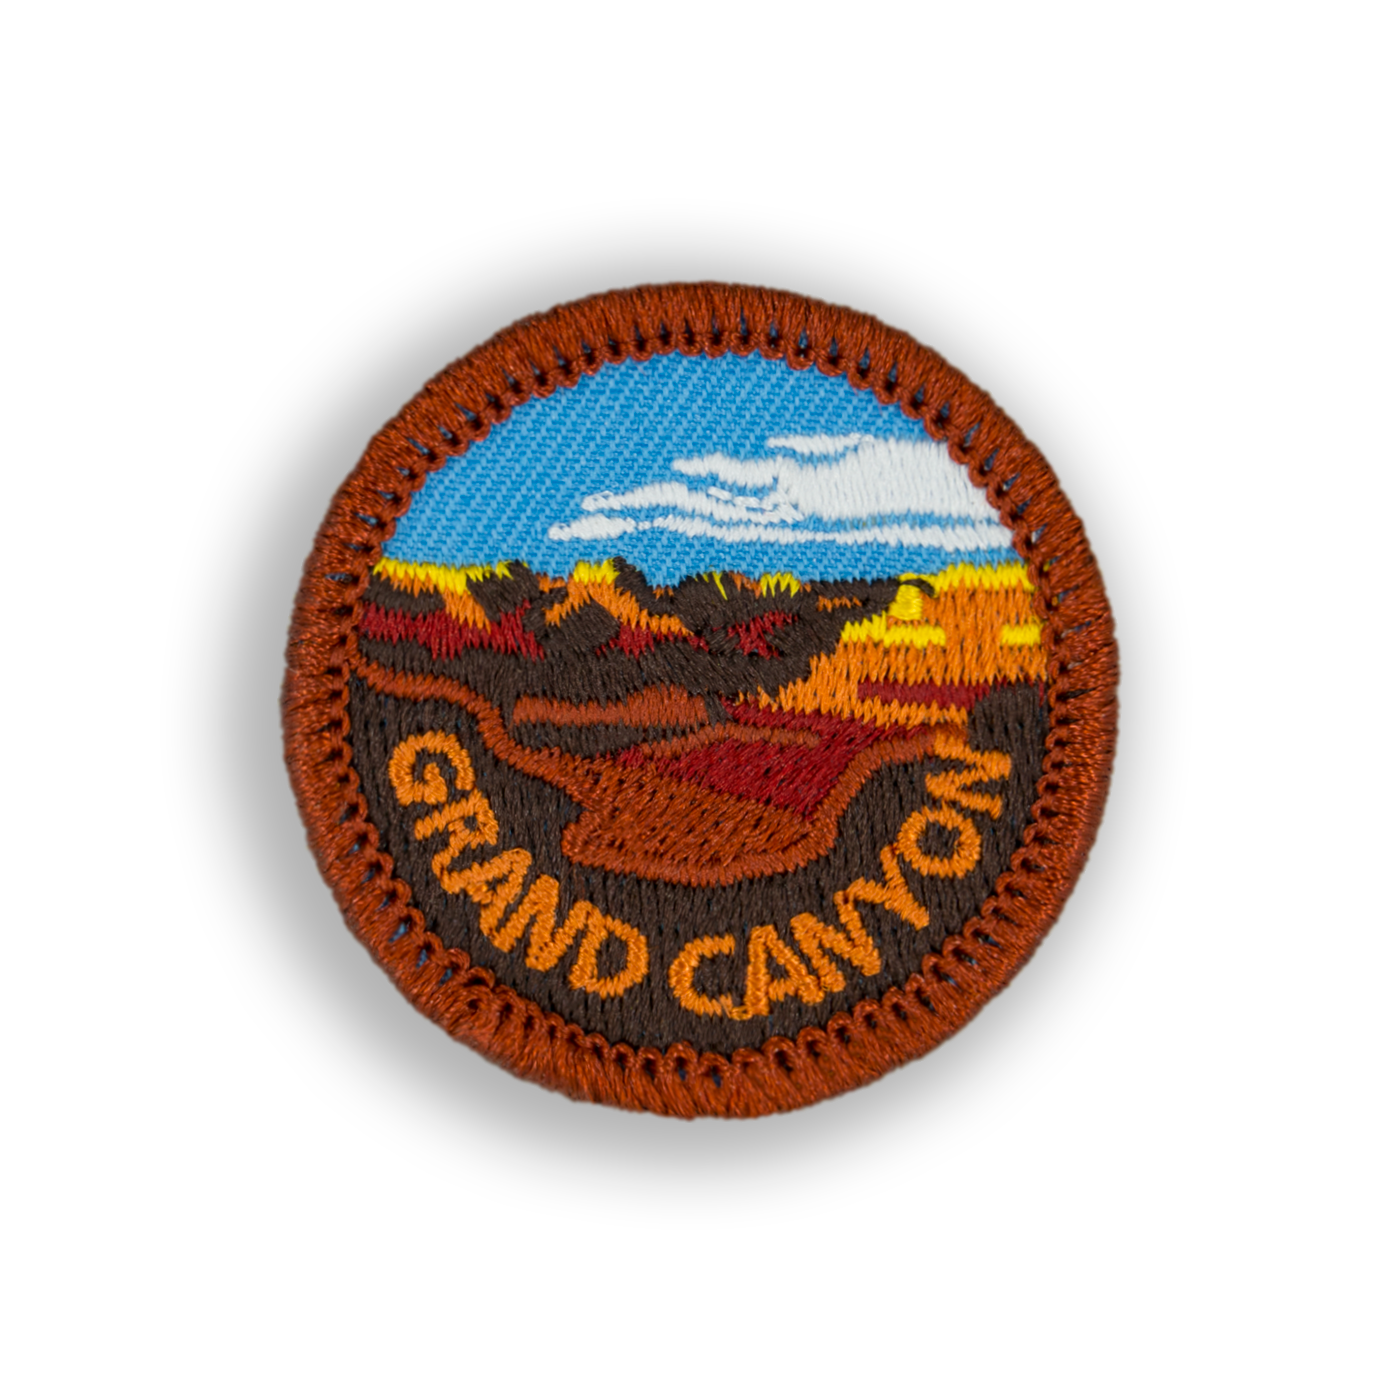 Grand Canyon Patch | Demerit Wear - Fake Merit Badges